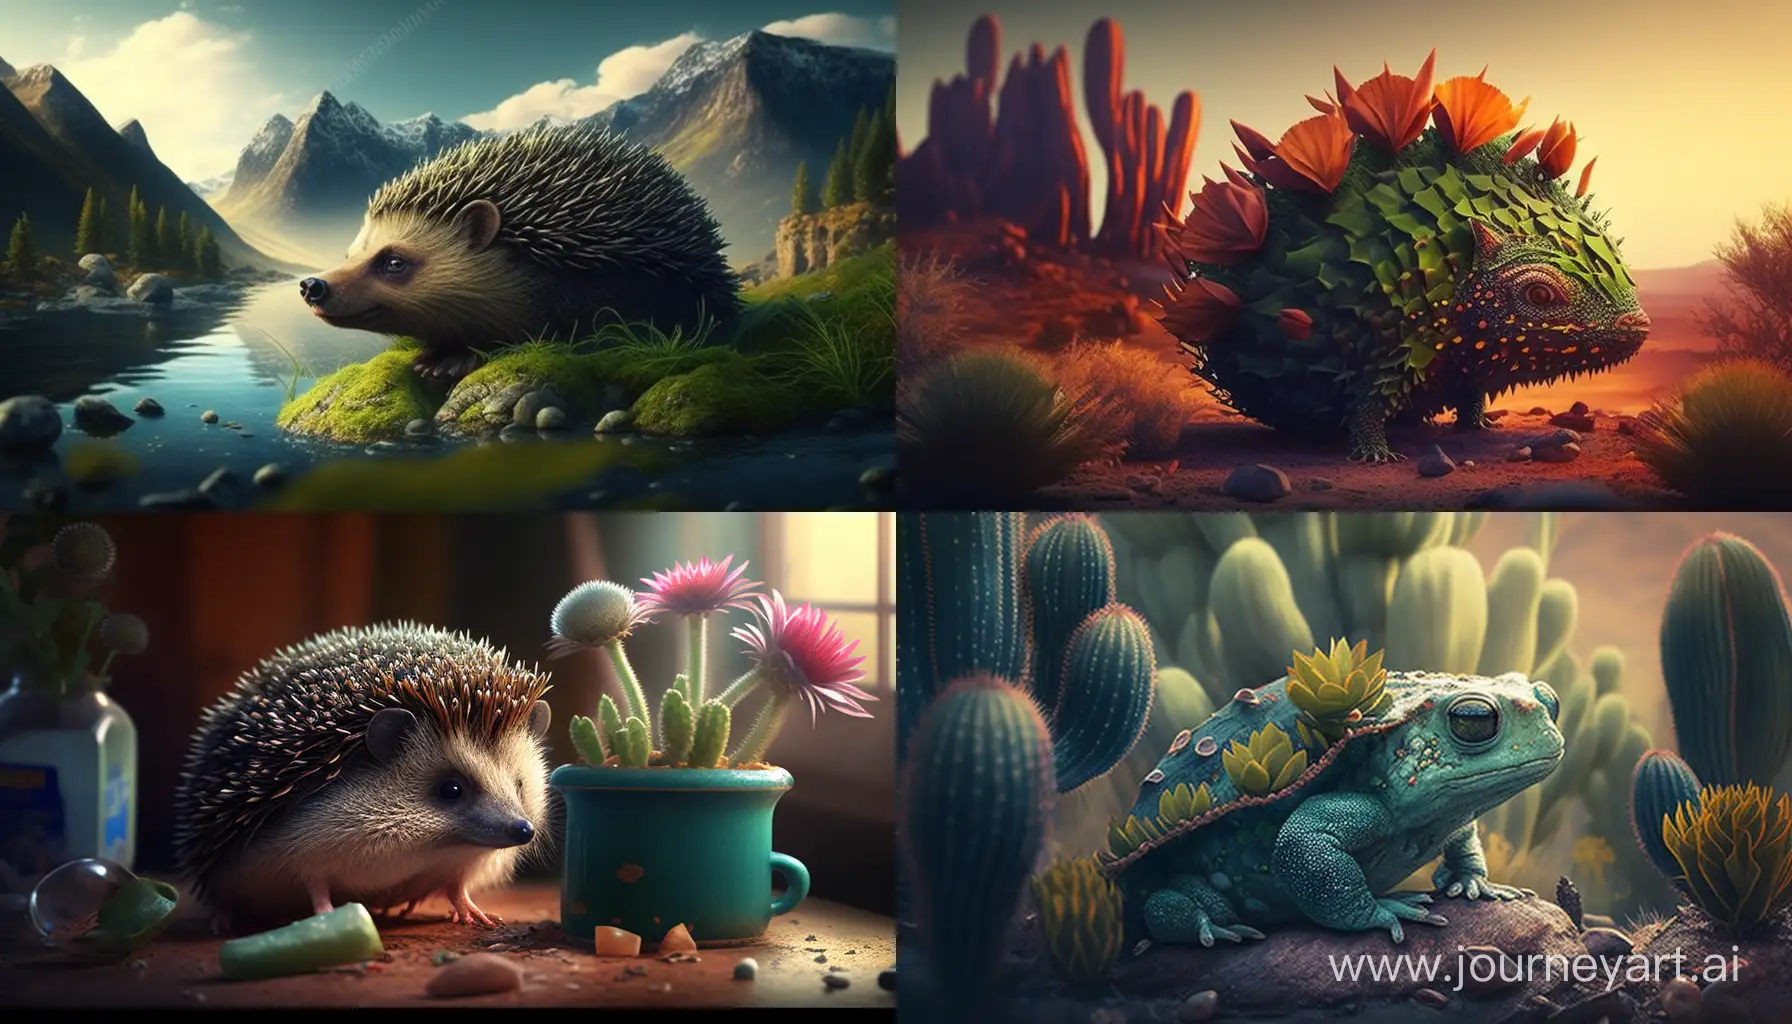 Hedgehog-Enjoying-Mountain-Serenity-with-a-Cake